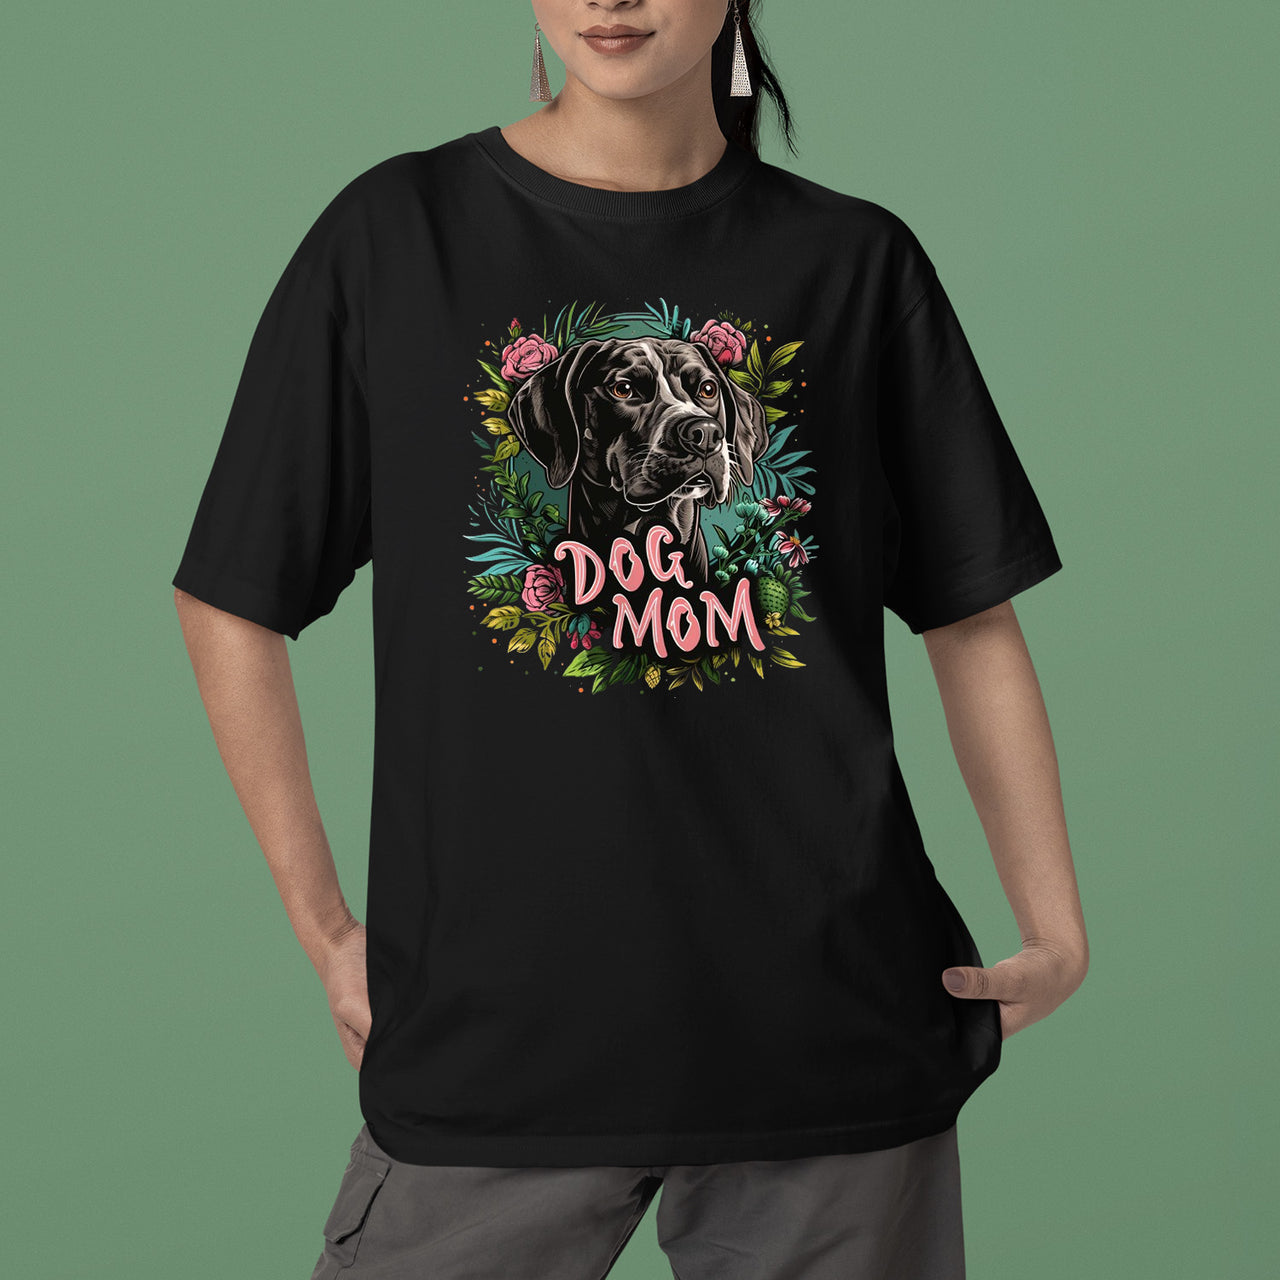 German Shorthaired Pointer Dog T-shirt, Pet Lover Shirt, Dog Lover Shirt, Dog Mom T-Shirt, Dog Owner Shirt, Gift For Dog Mom, Funny Dog Shirts, Women Dog T-Shirt, Mother's Day Gift, Dog Lover Wife Gifts, Dog Shirt